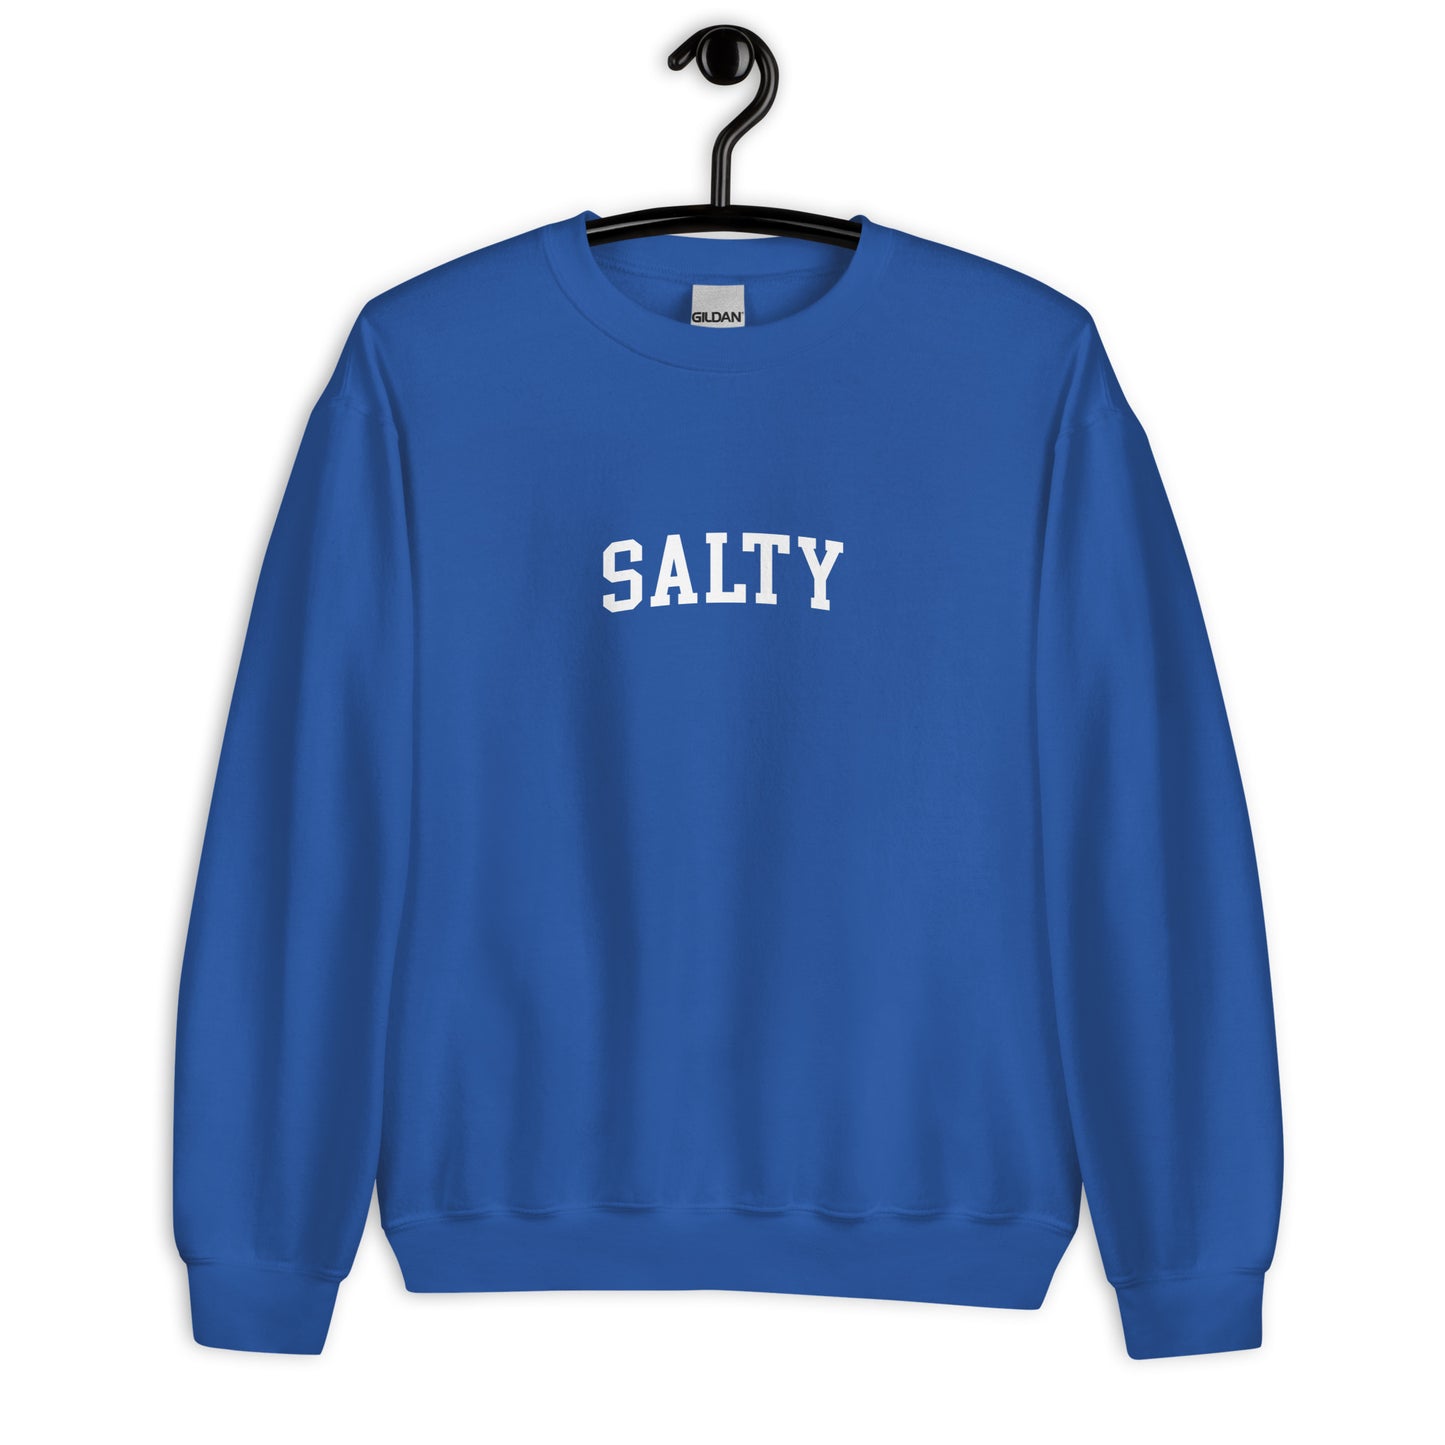 Salty Sweatshirt - Arched Font